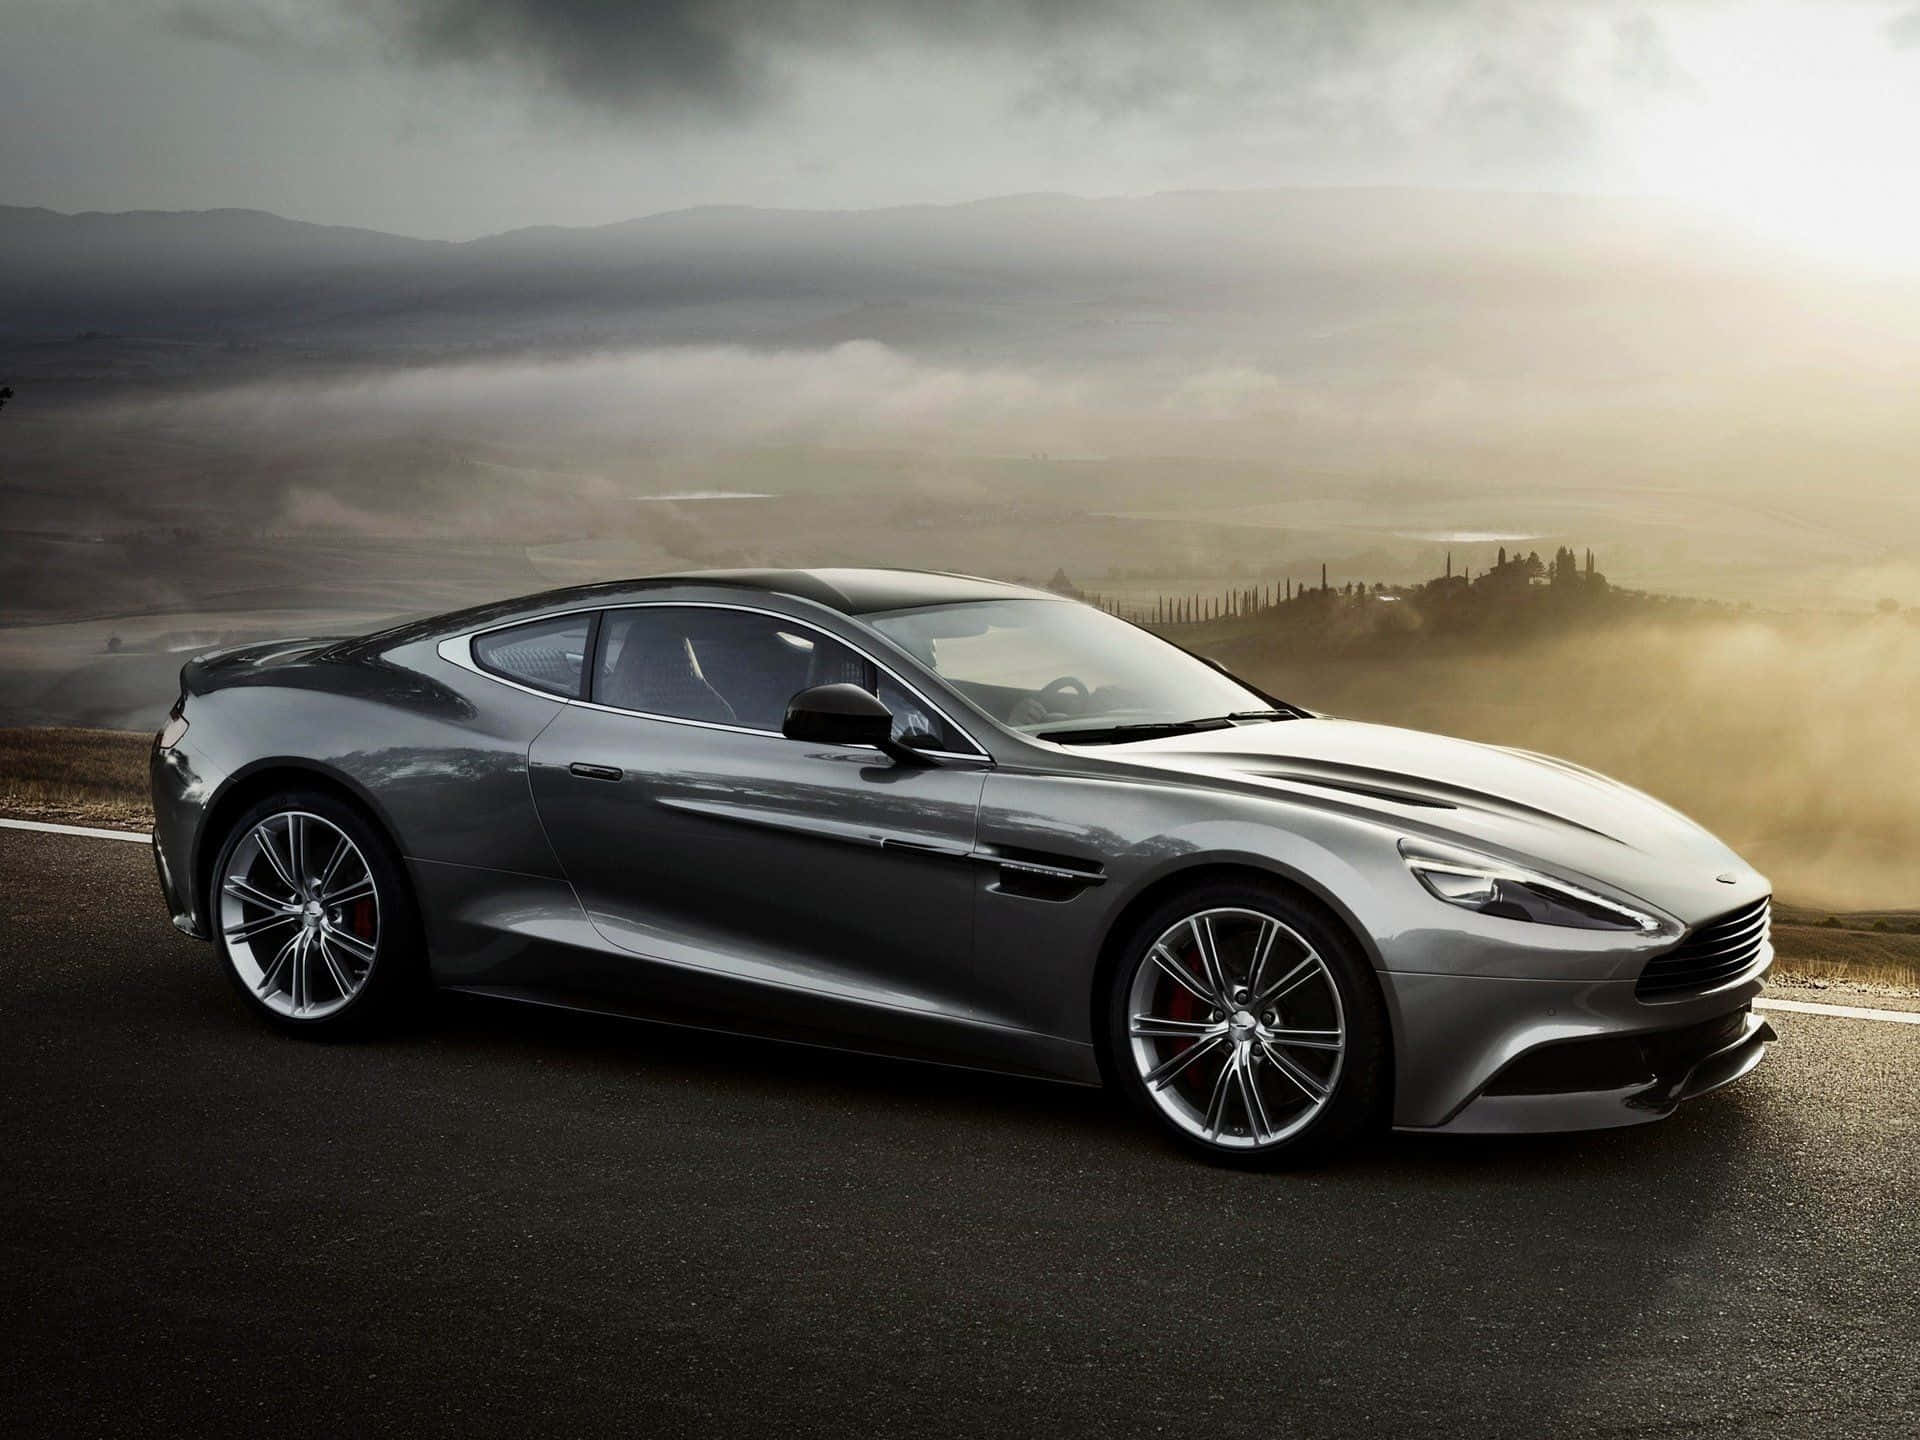 Sleek Aston Martin Vanquish in a Majestic Landscape Wallpaper